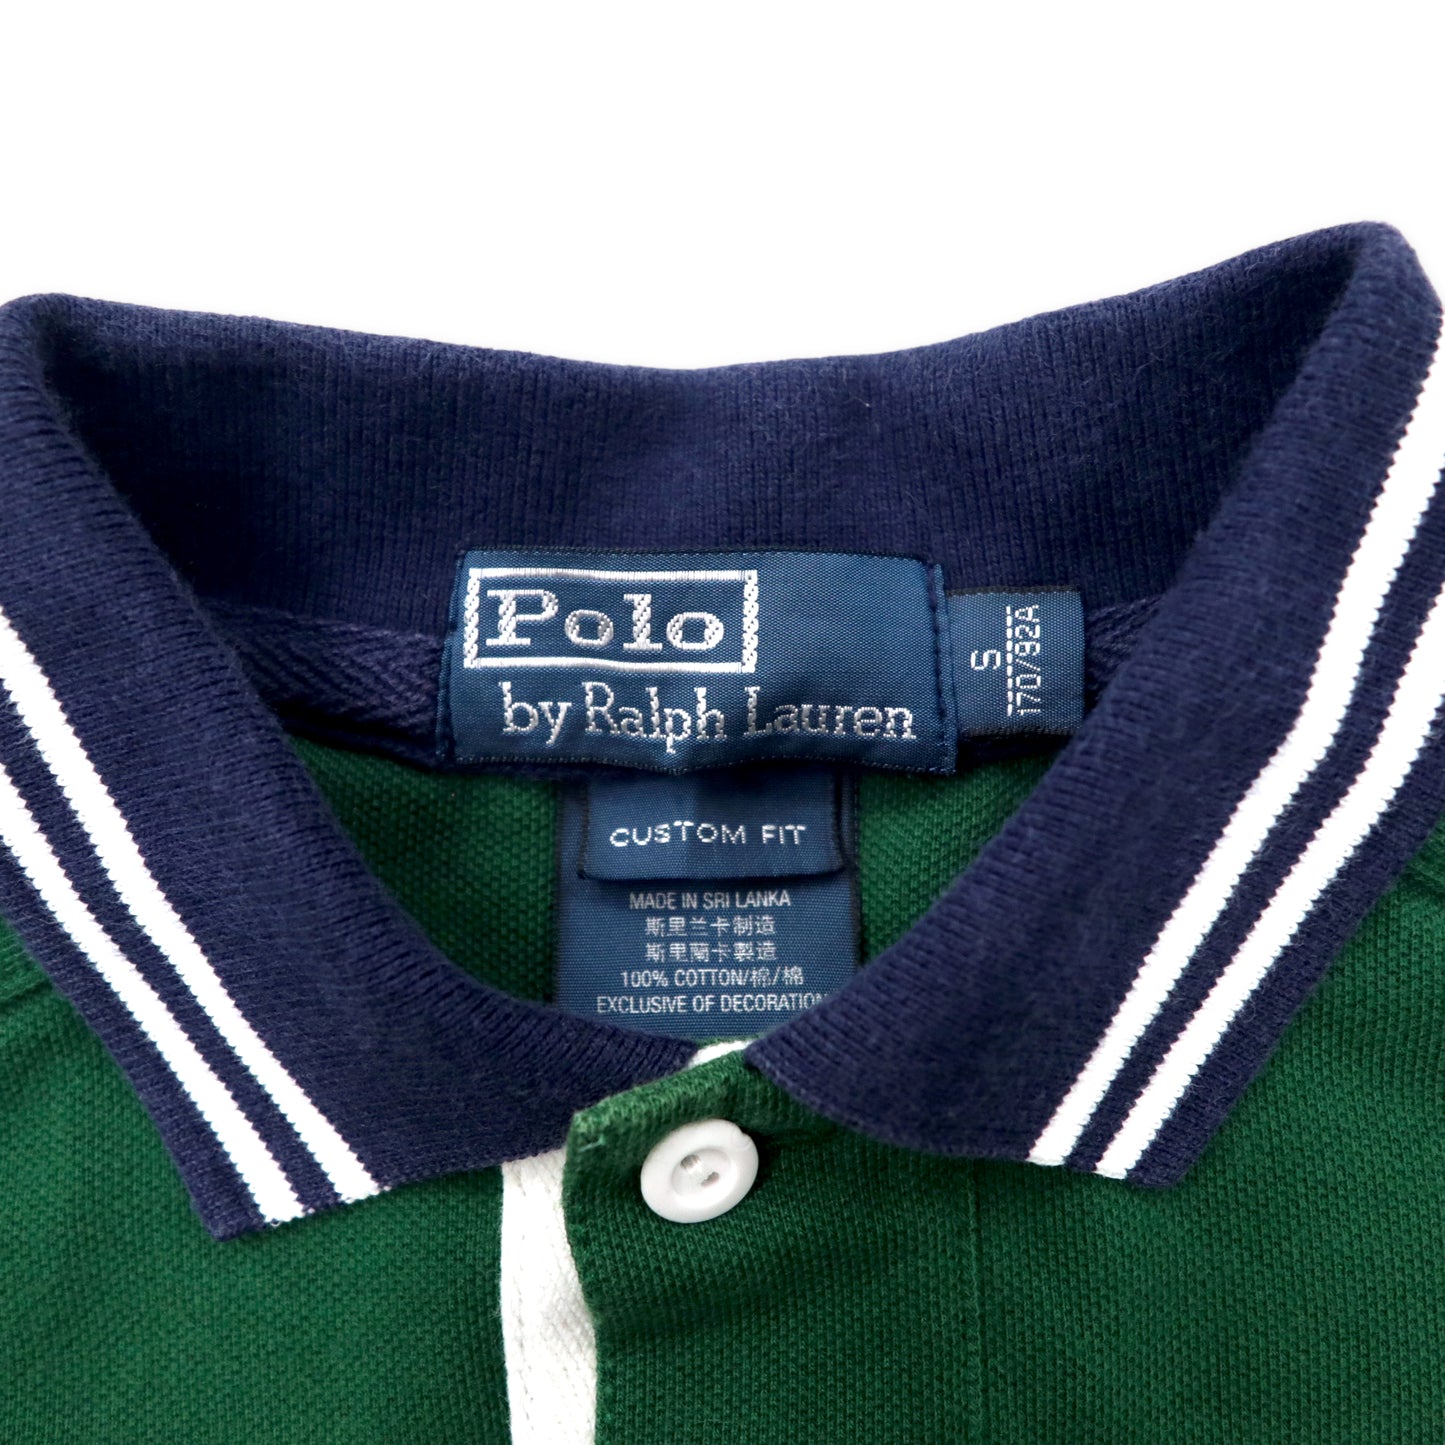 Polo by Ralph Lauren ビッグポニー ポロシャツ 170 グリーン コットン